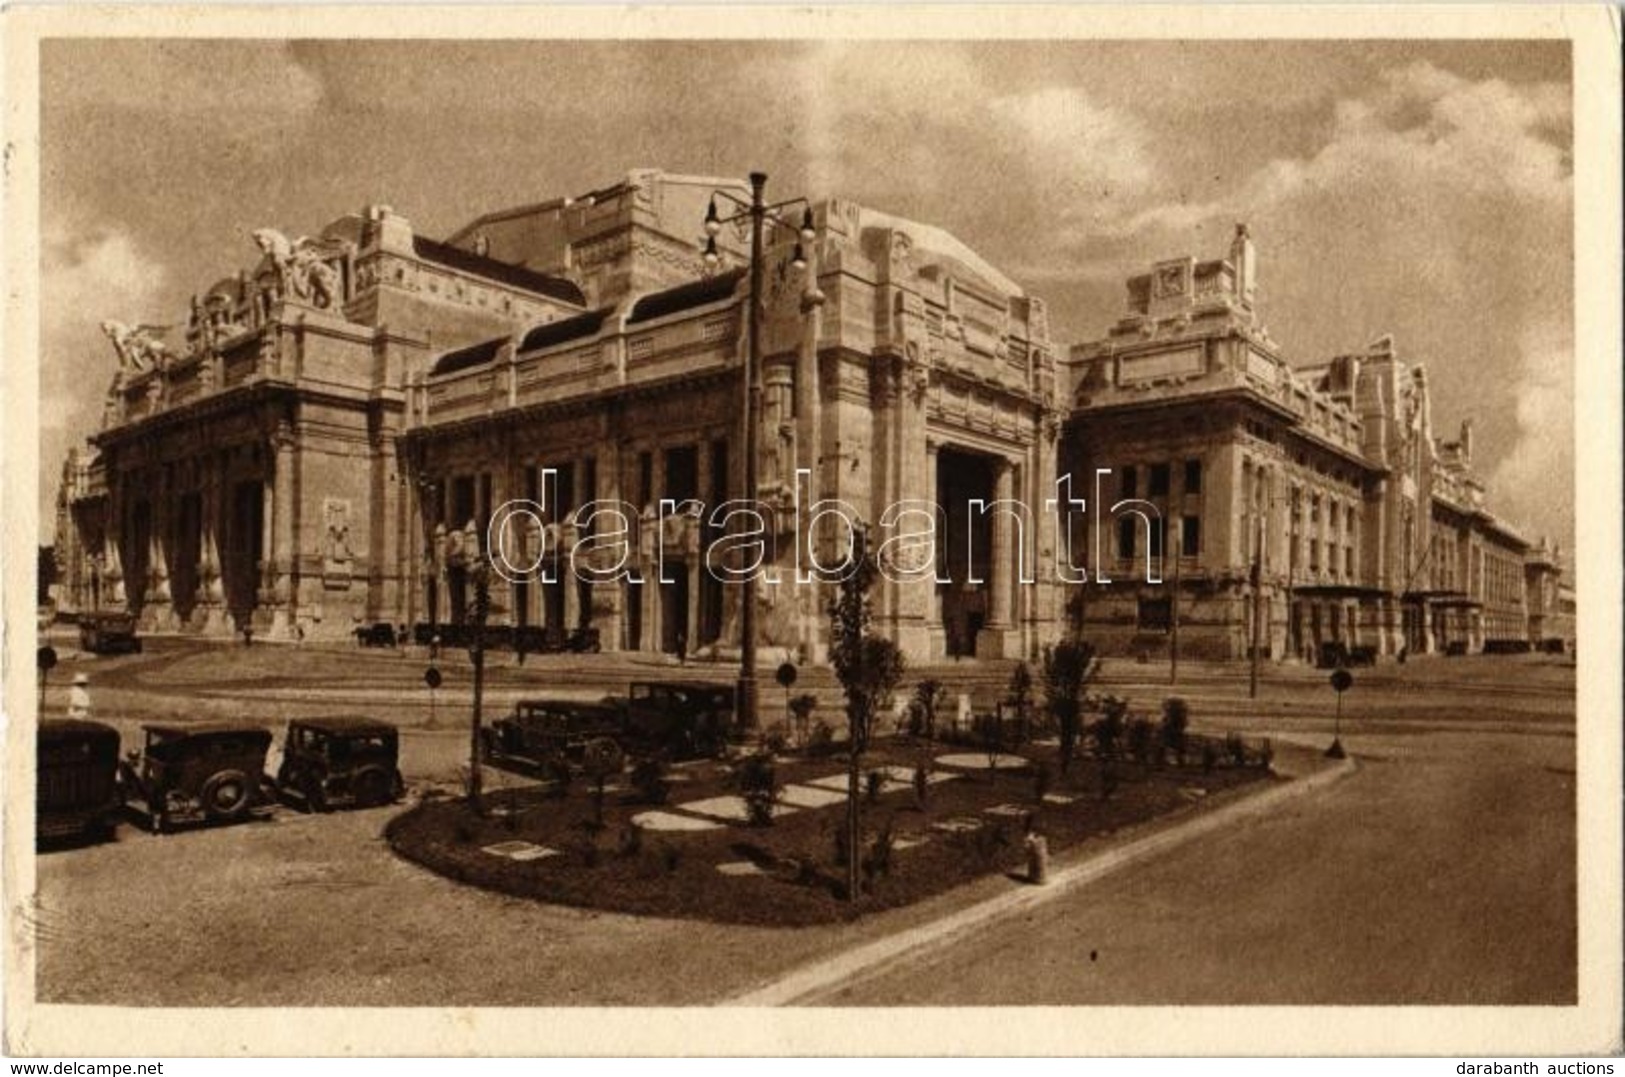 Milan, Milano; Stazione / Railway Station - 2 Pre-1945 Postcards - Unclassified